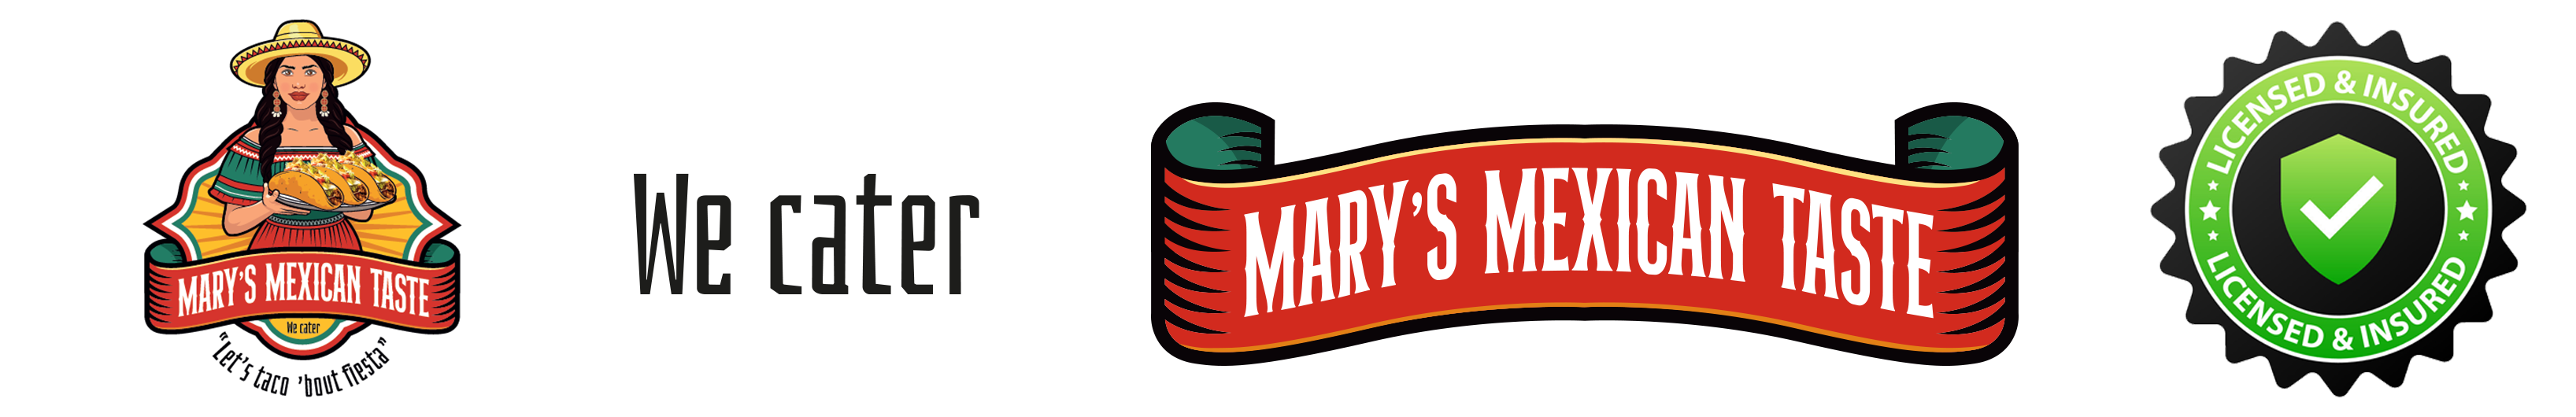 Mary’s Mexican Taste